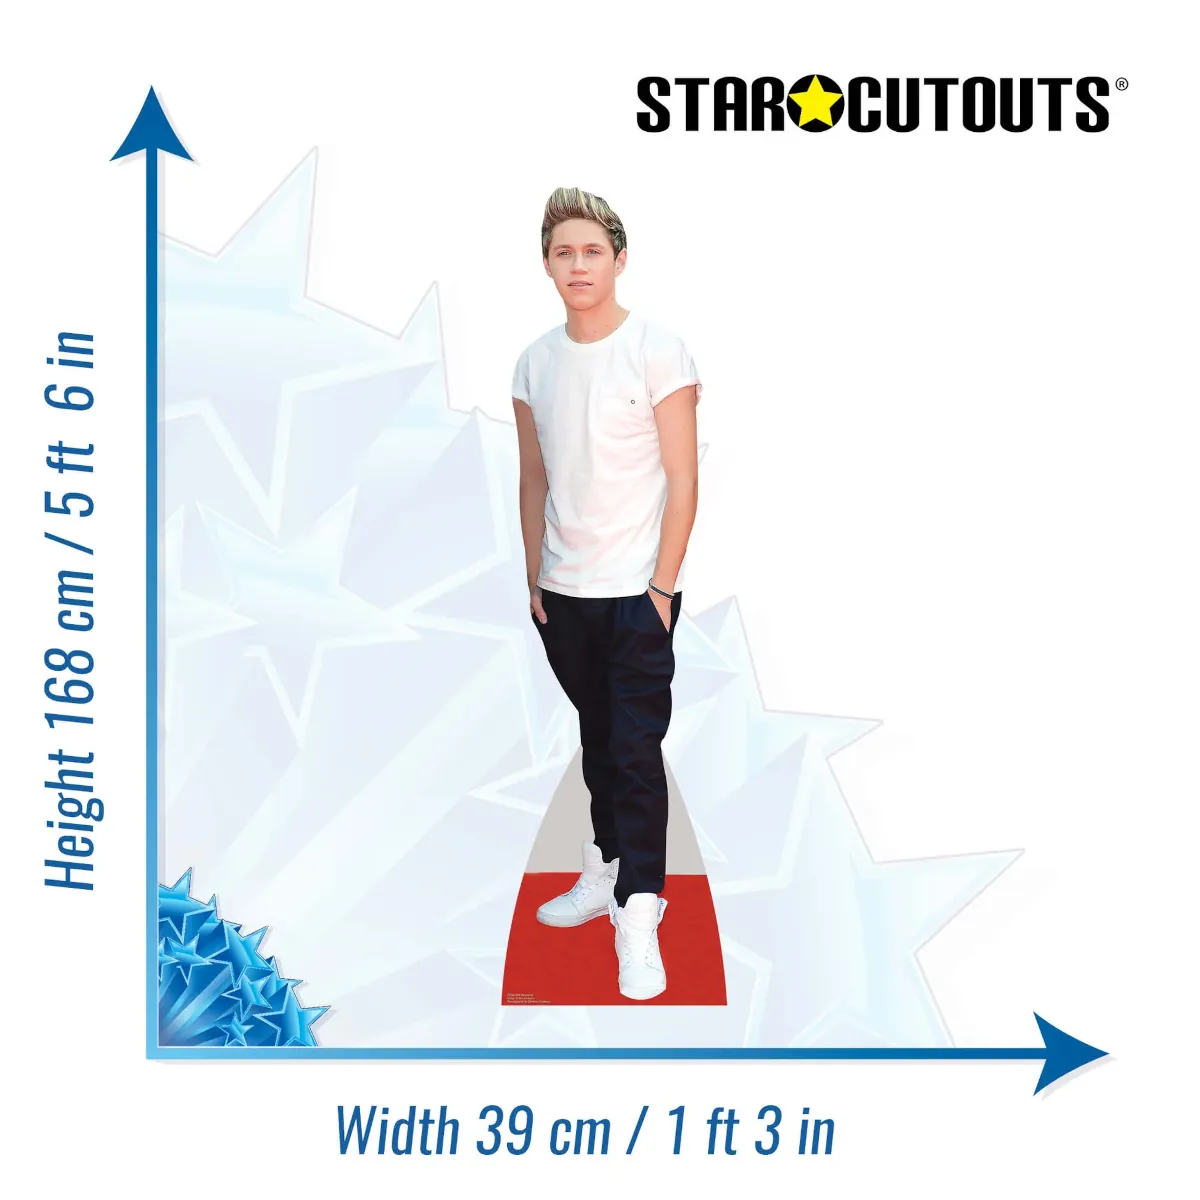 CS581 Niall Horan 'One Direction' (Irish Singer Songwriter) Lifesize Cardboard Cutout Standee Size